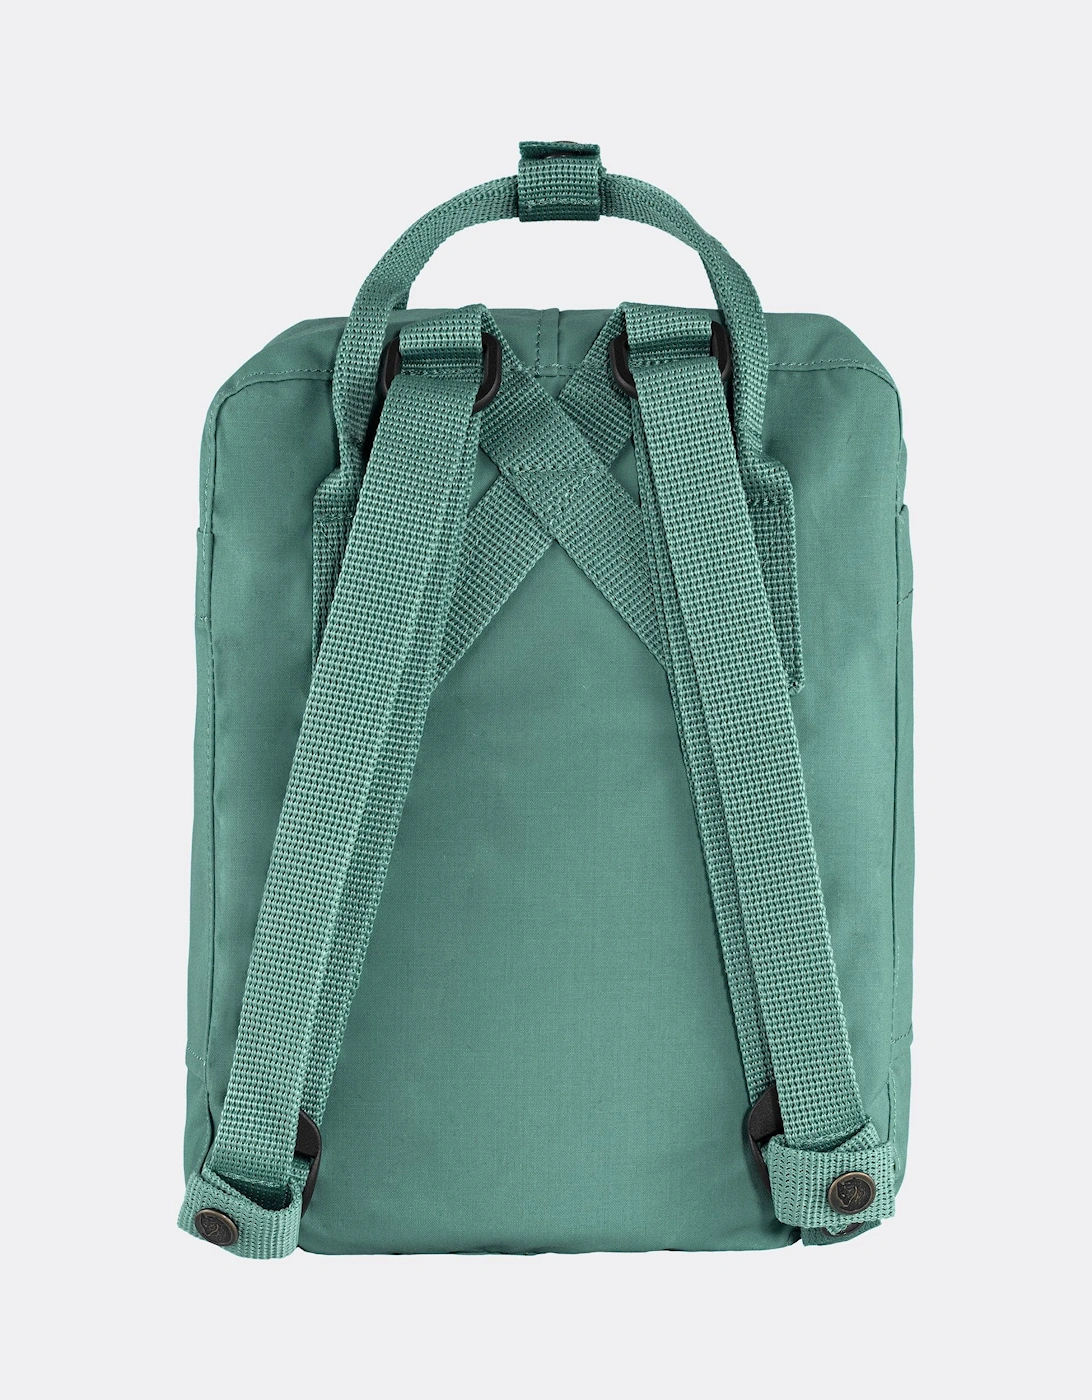 Mini Unisex Backpack